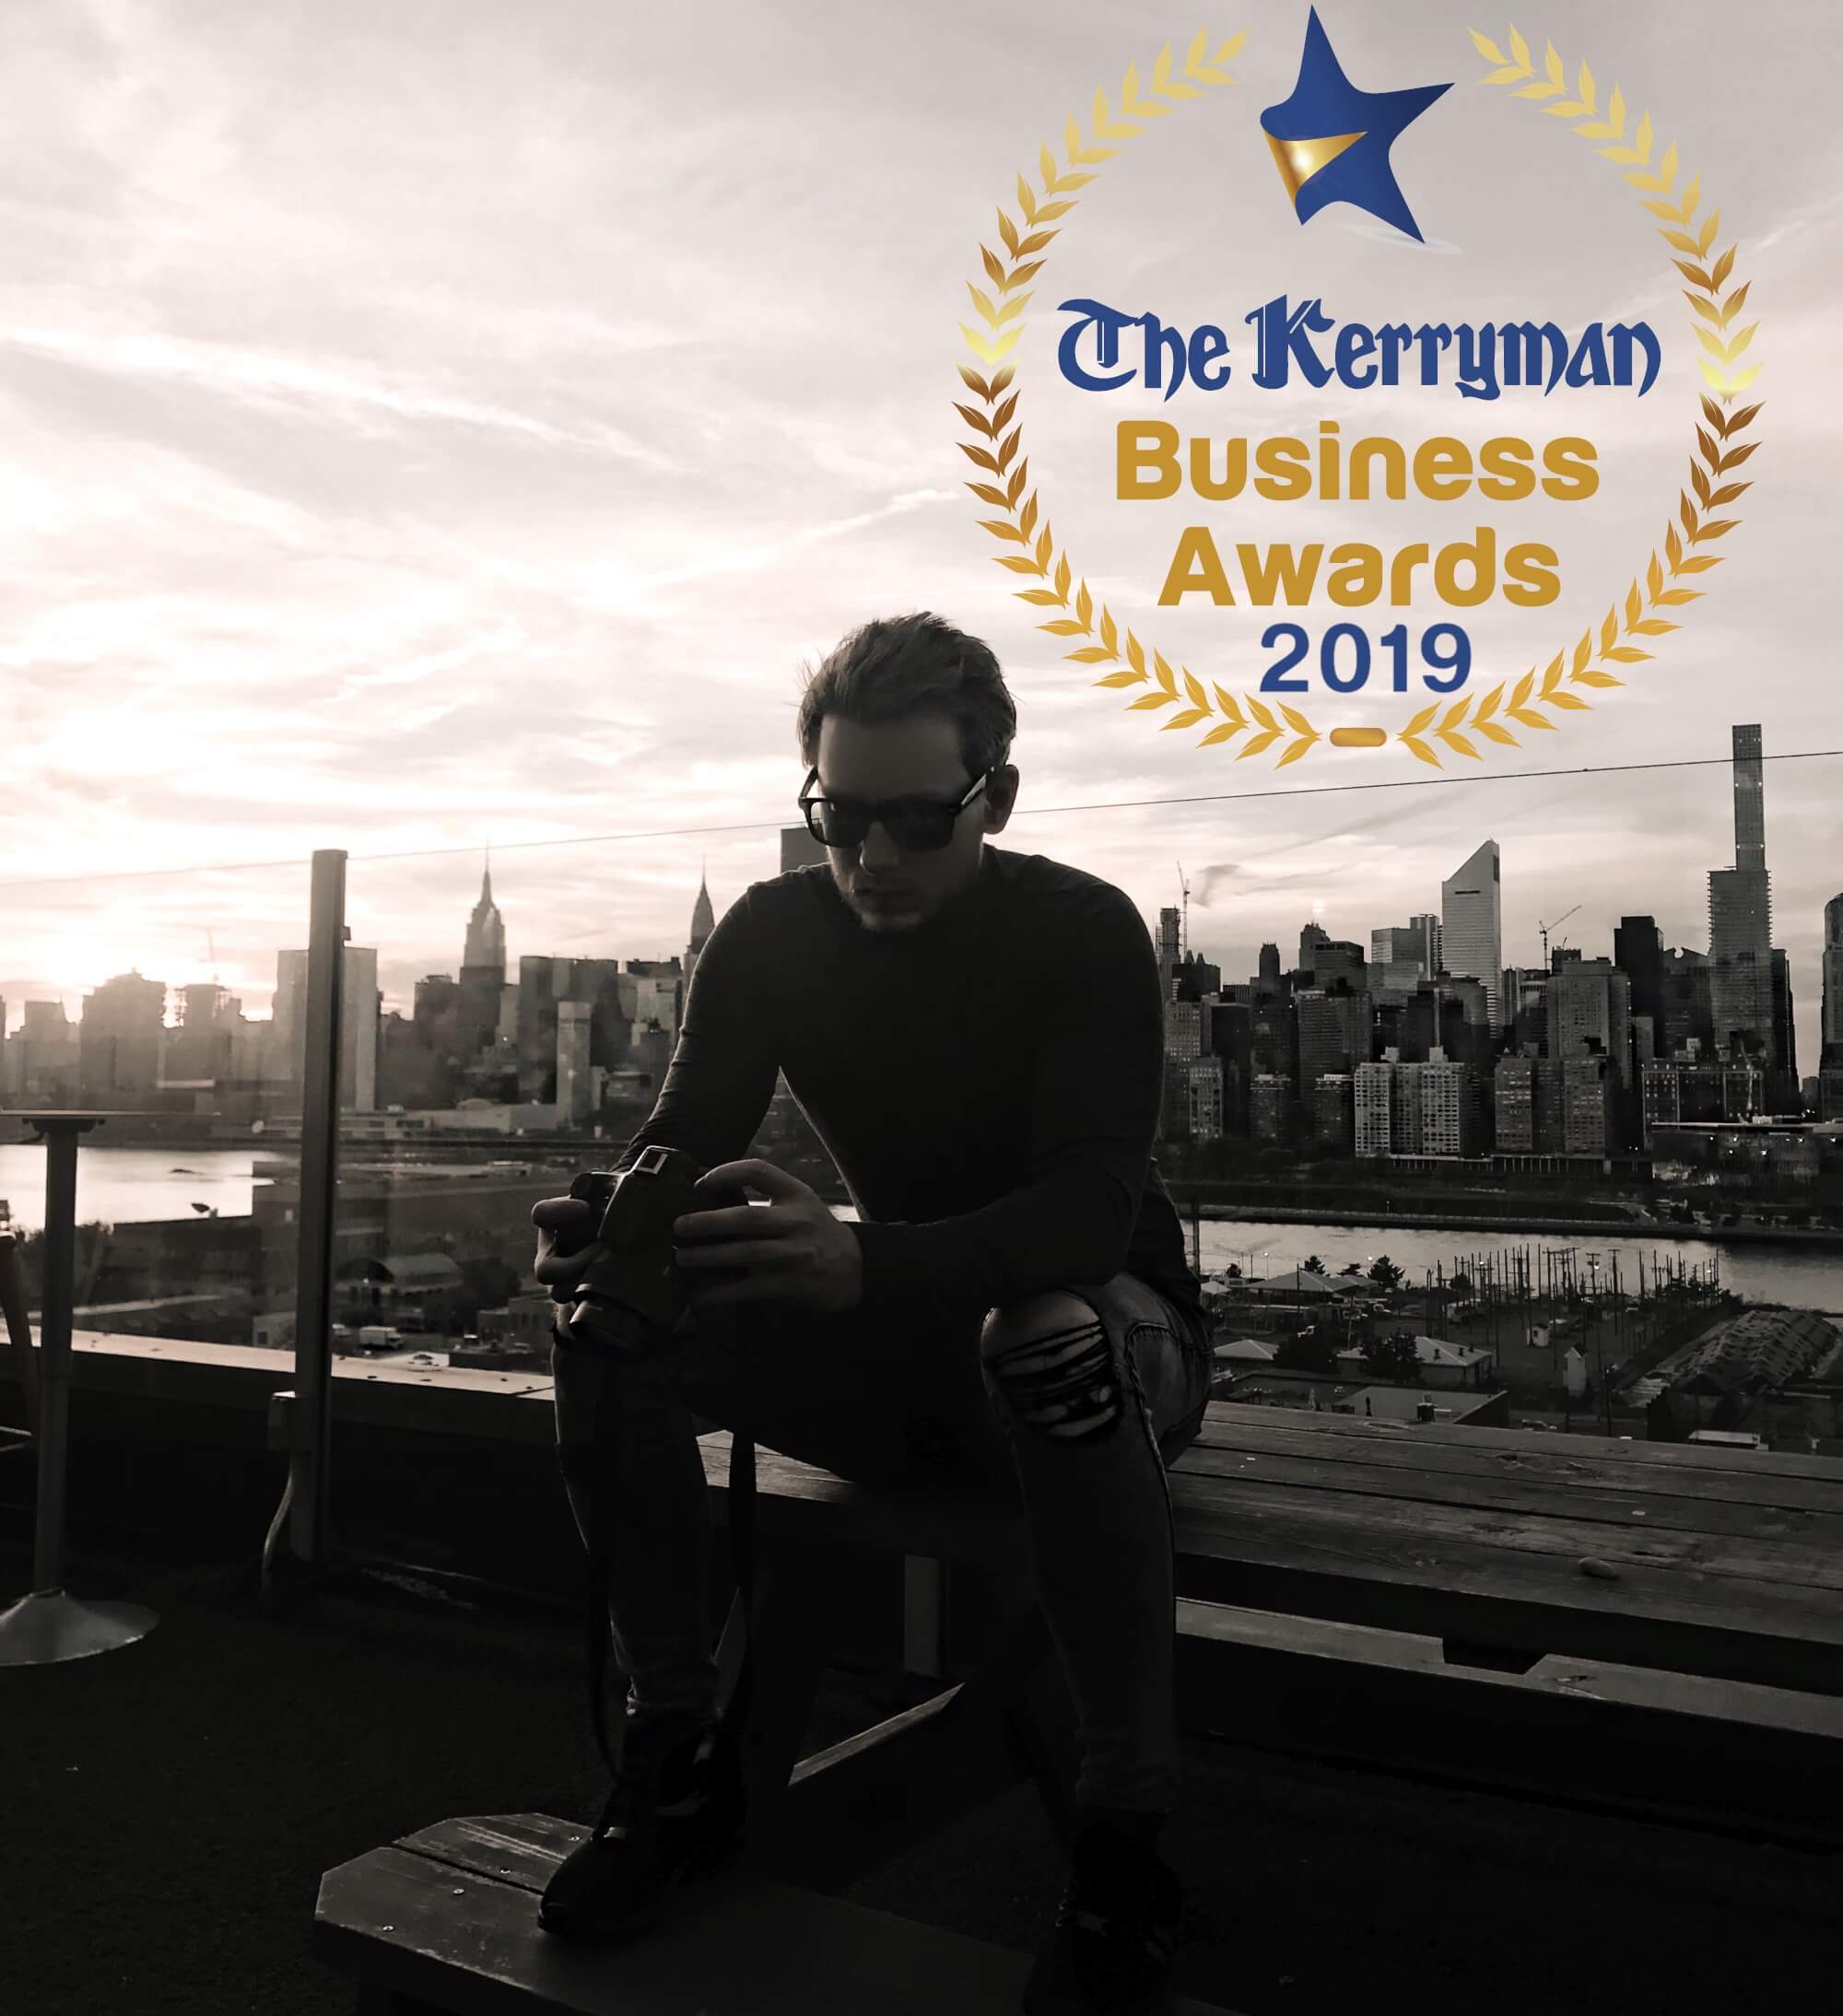 The Kerryman Business Awards 2019